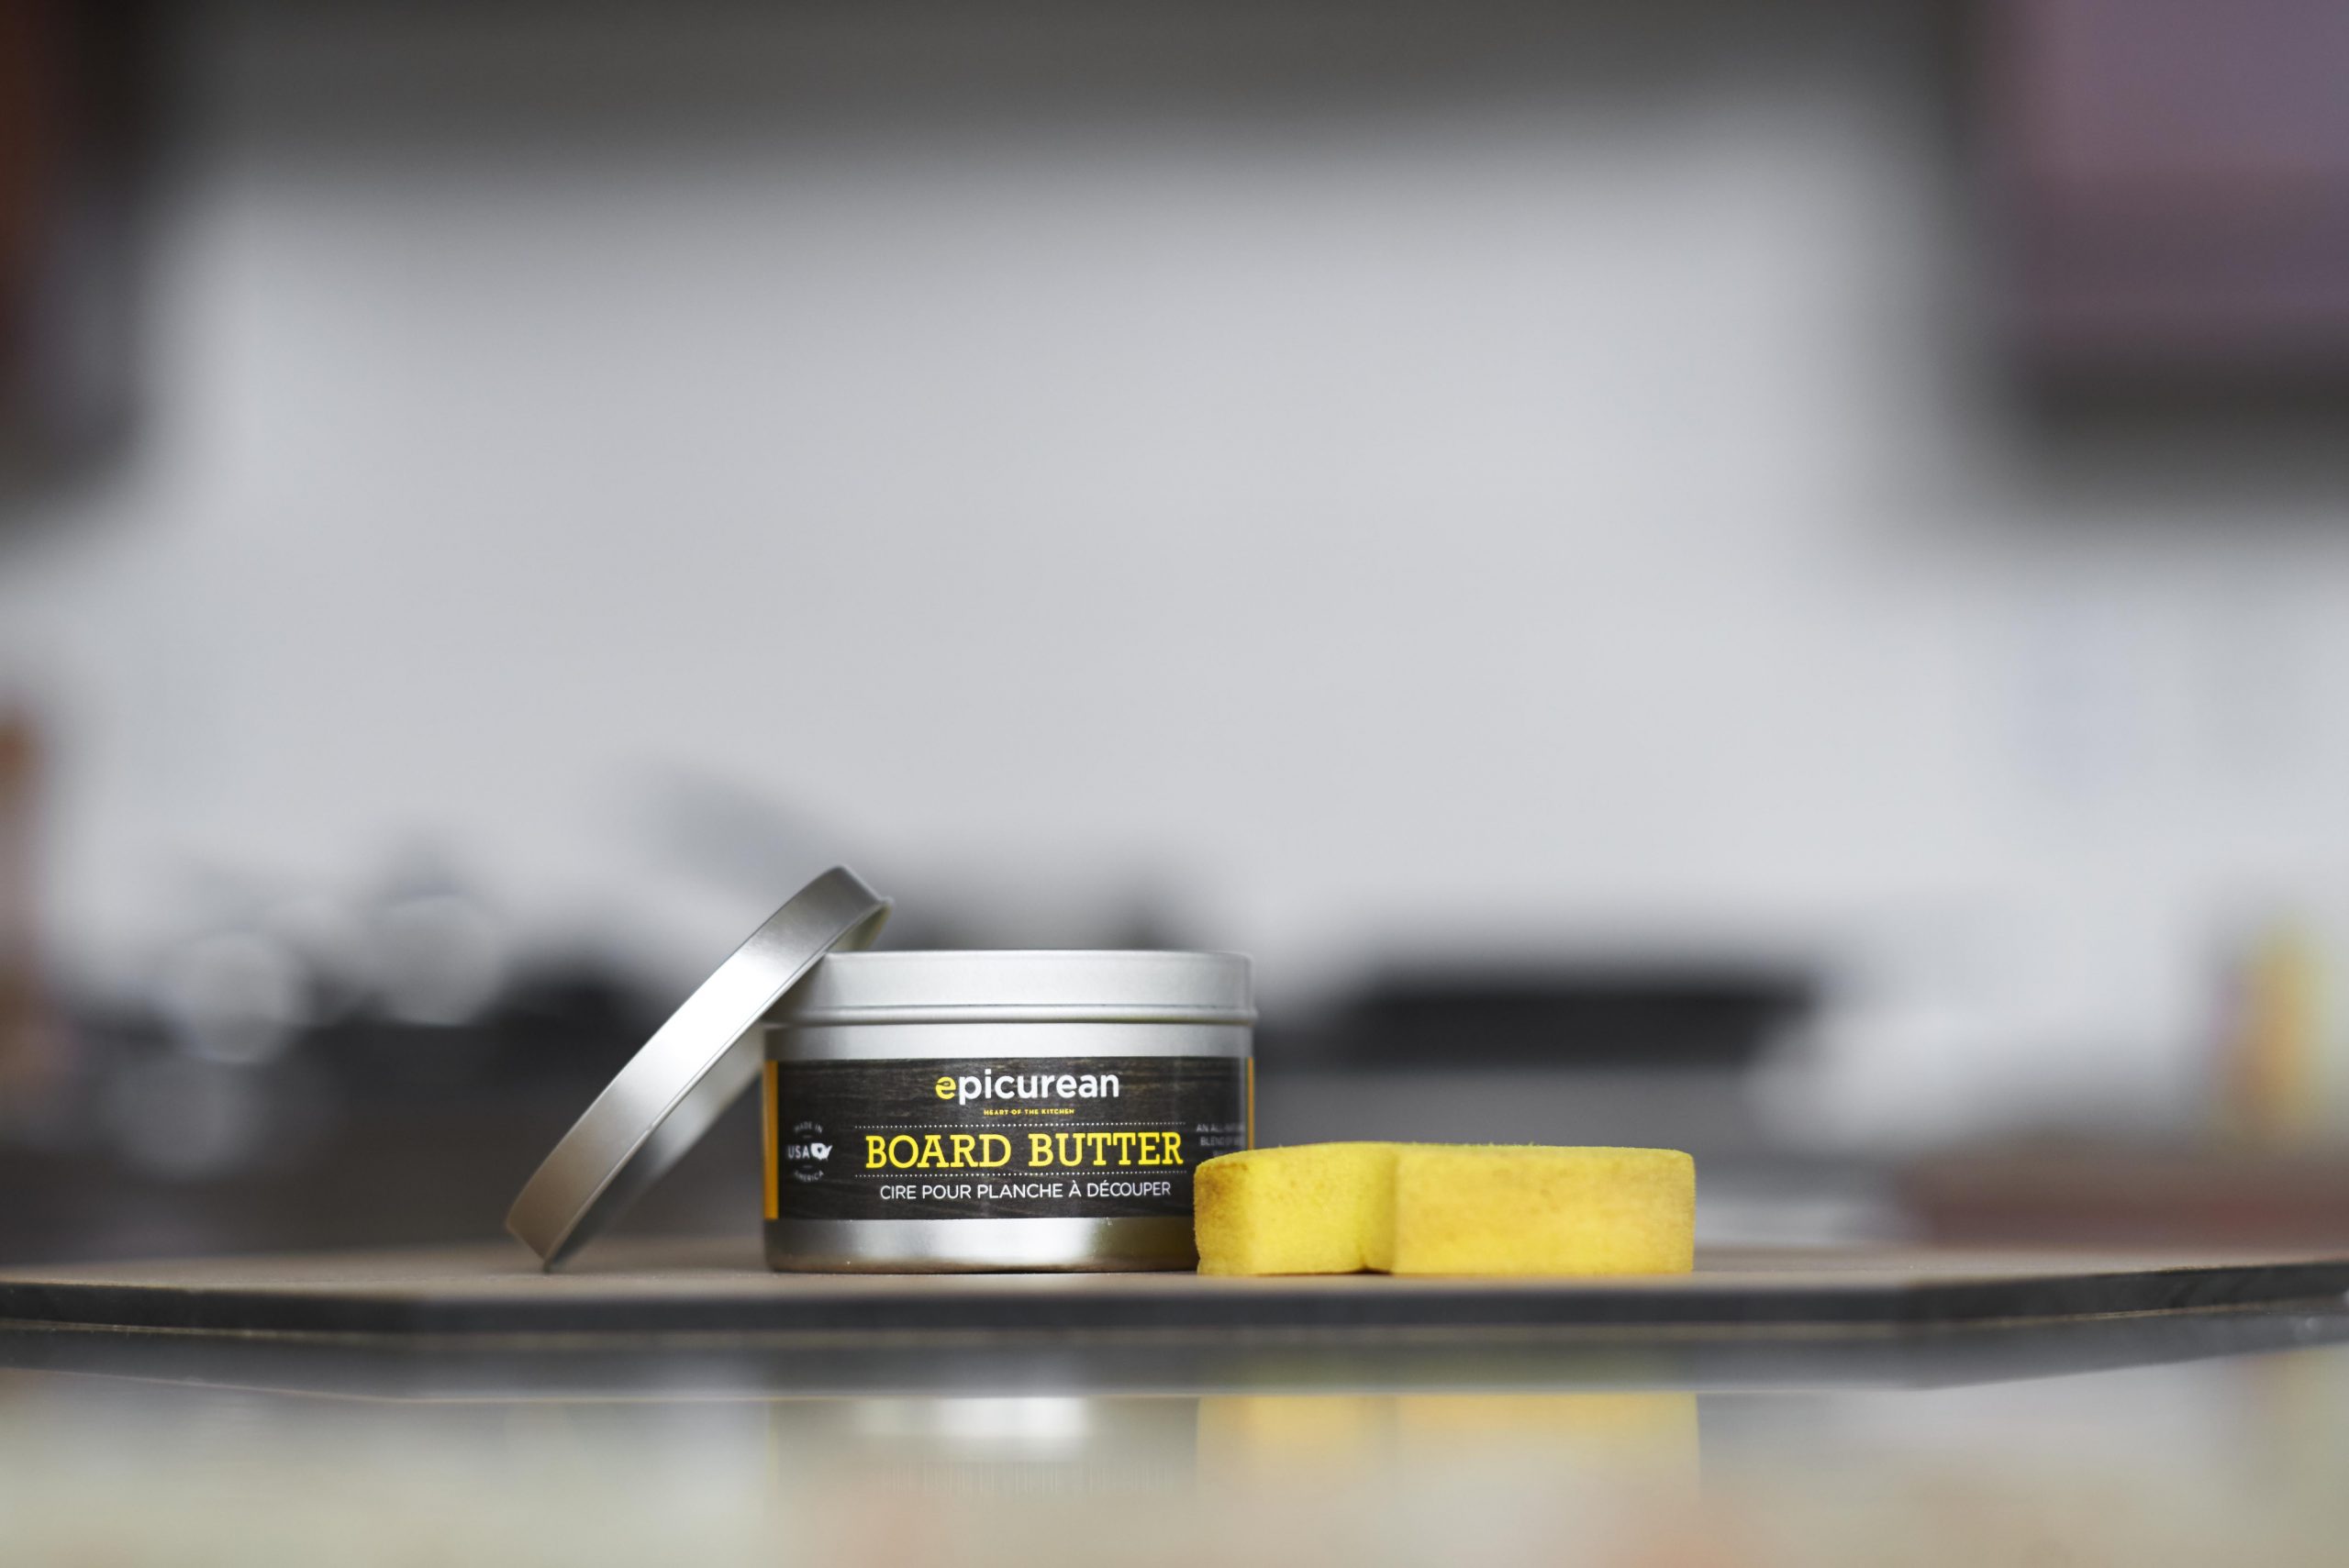 Epicurean Board Butter Product Image 0